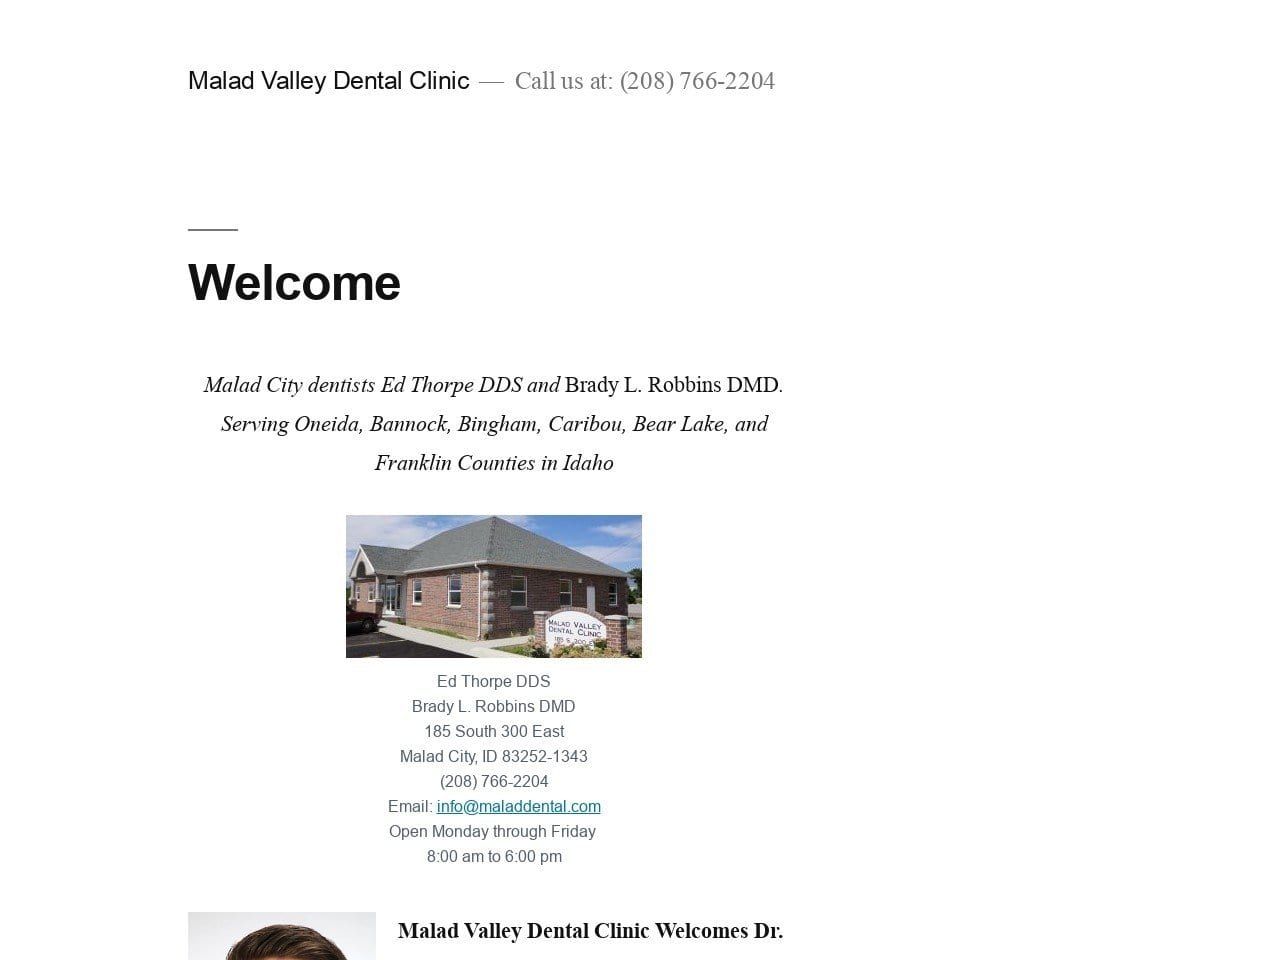 Malad Valley Dental Clinic Website Screenshot from maladdental.com